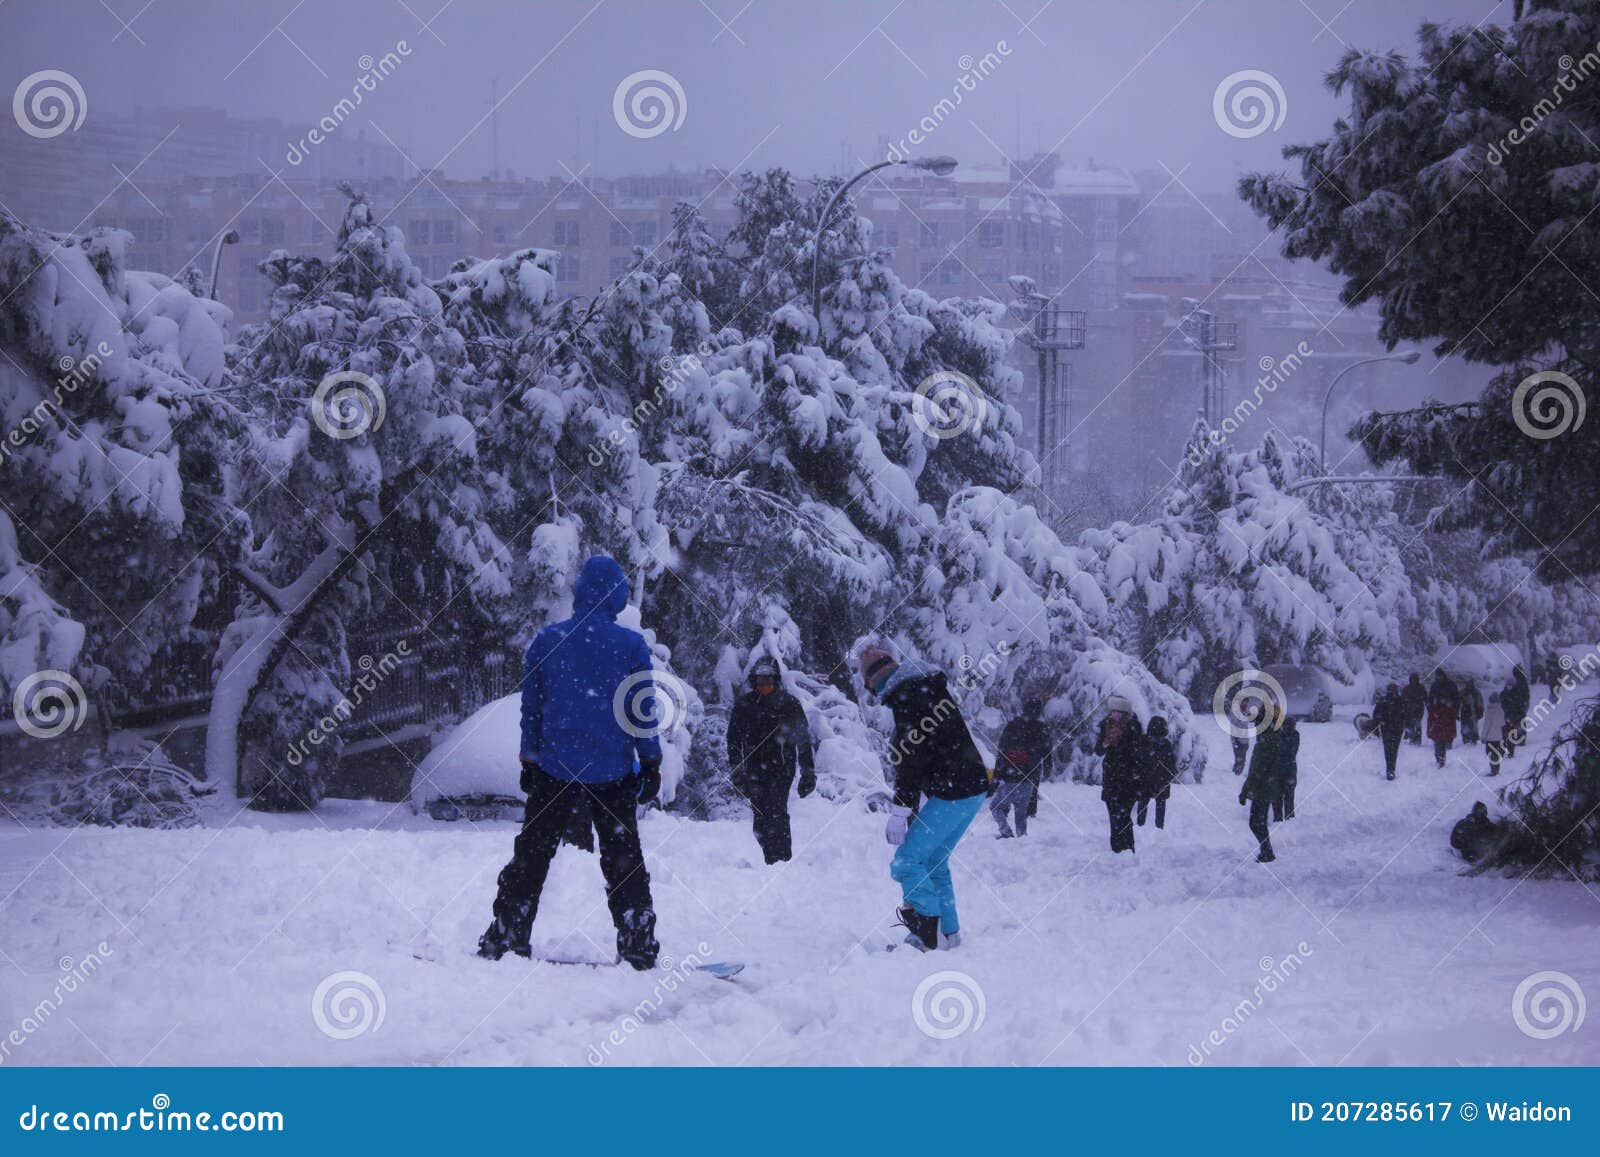 tormenta filomena madrid. gente divertiendose en la nieve. snow in madrid